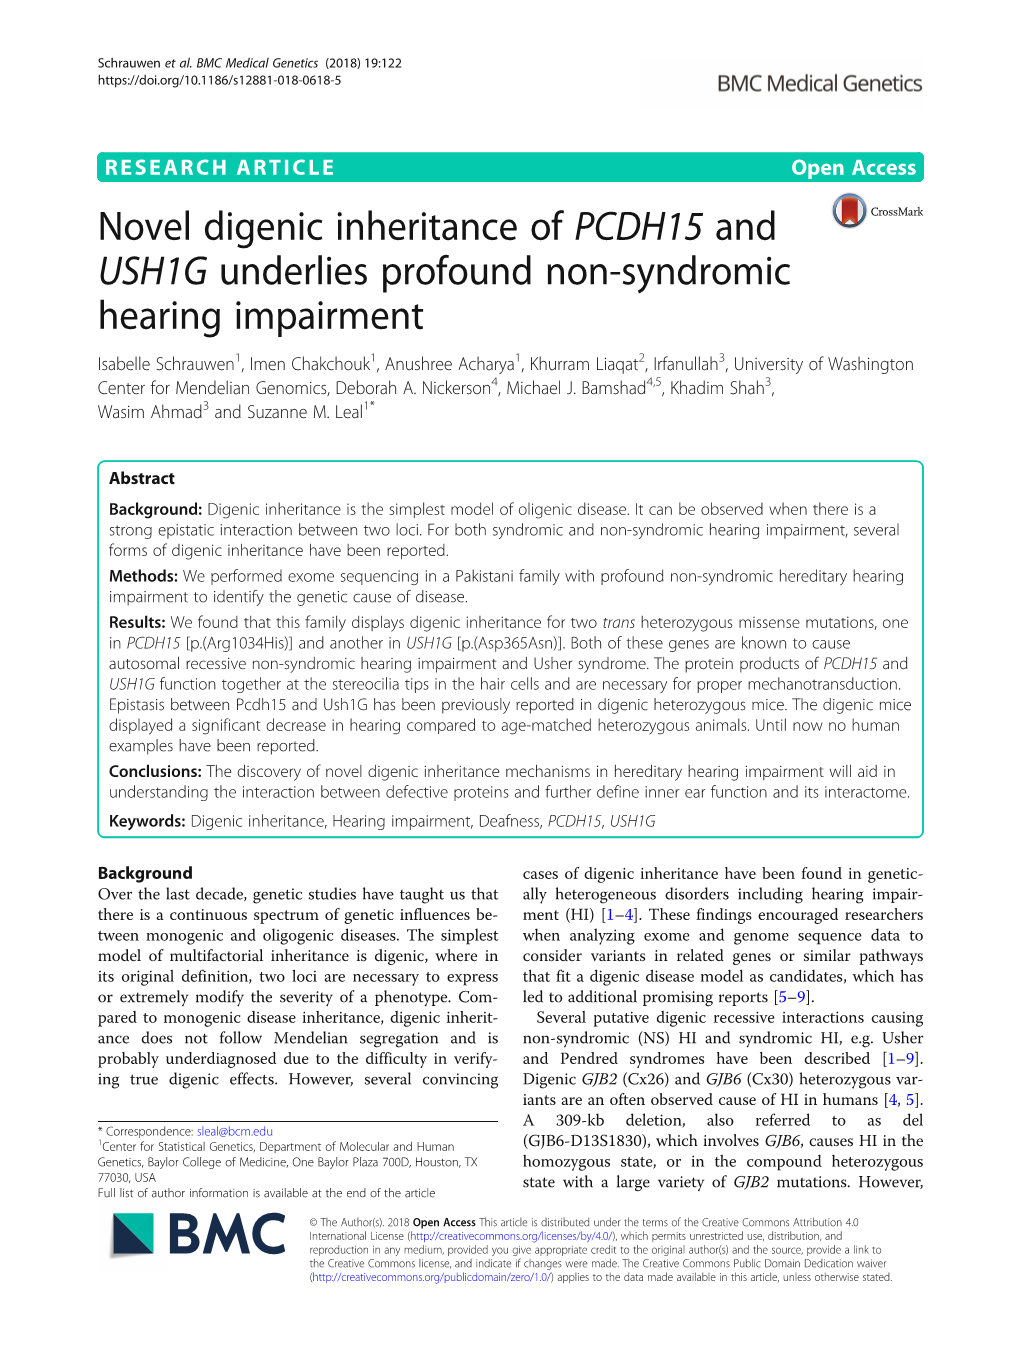 Novel Digenic Inheritance of PCDH15 and USH1G Underlies Profound